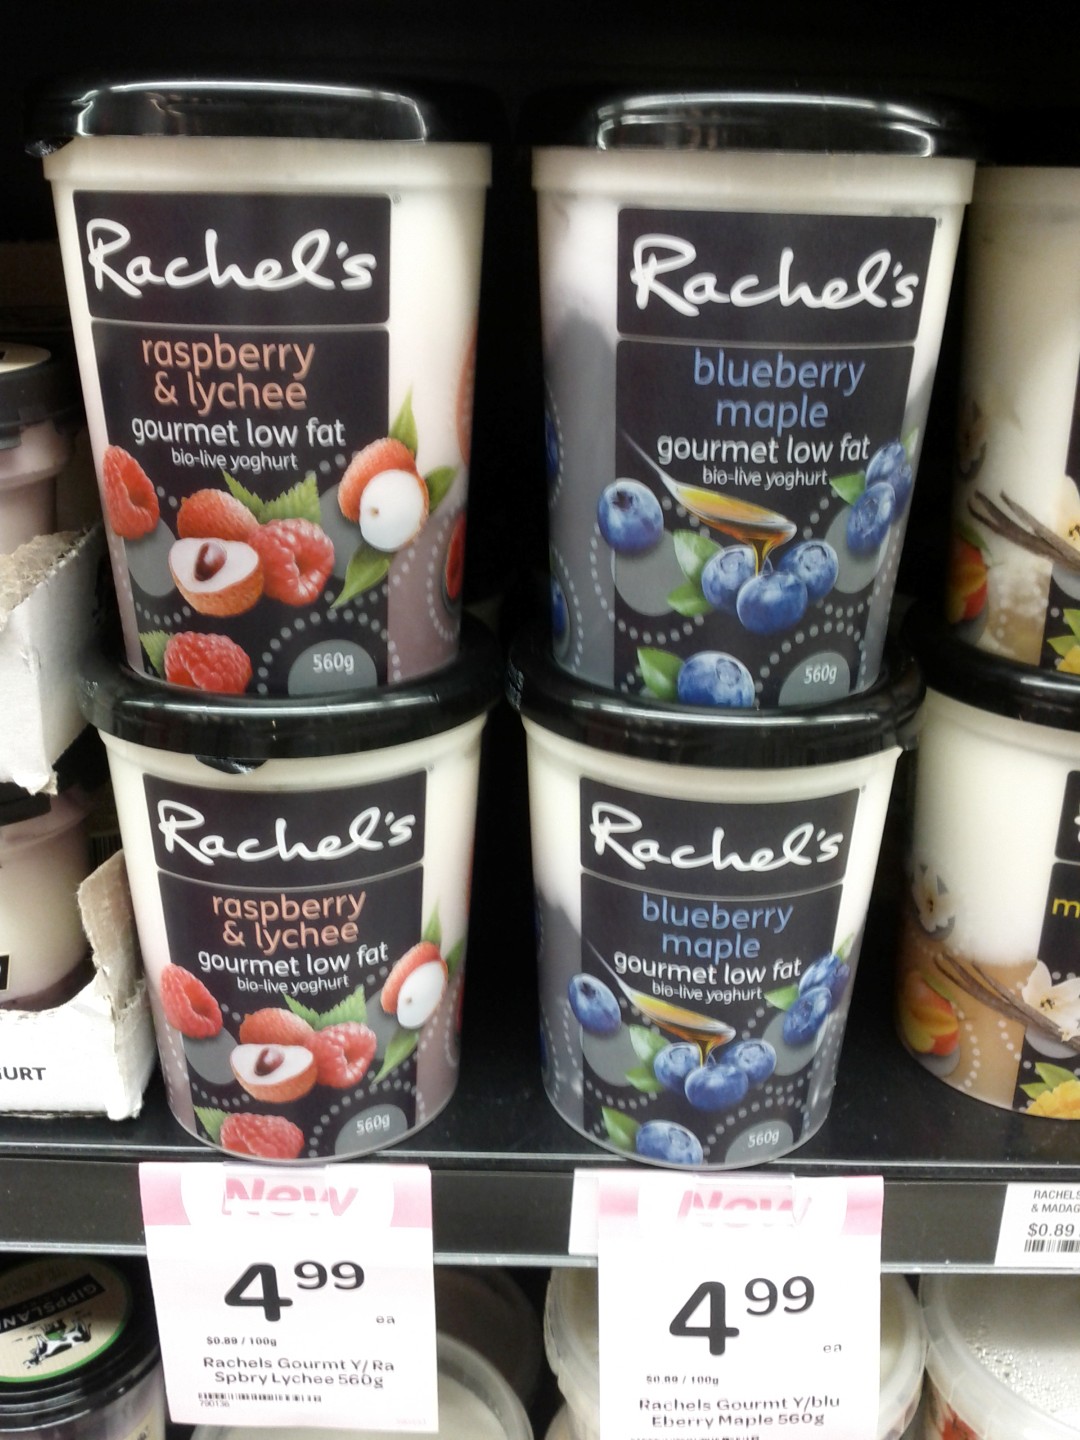 Rachels 560g Gourmet Low Fat Bio-Live Yoghurt, Raspberry & Lychee, Blueberry Maple